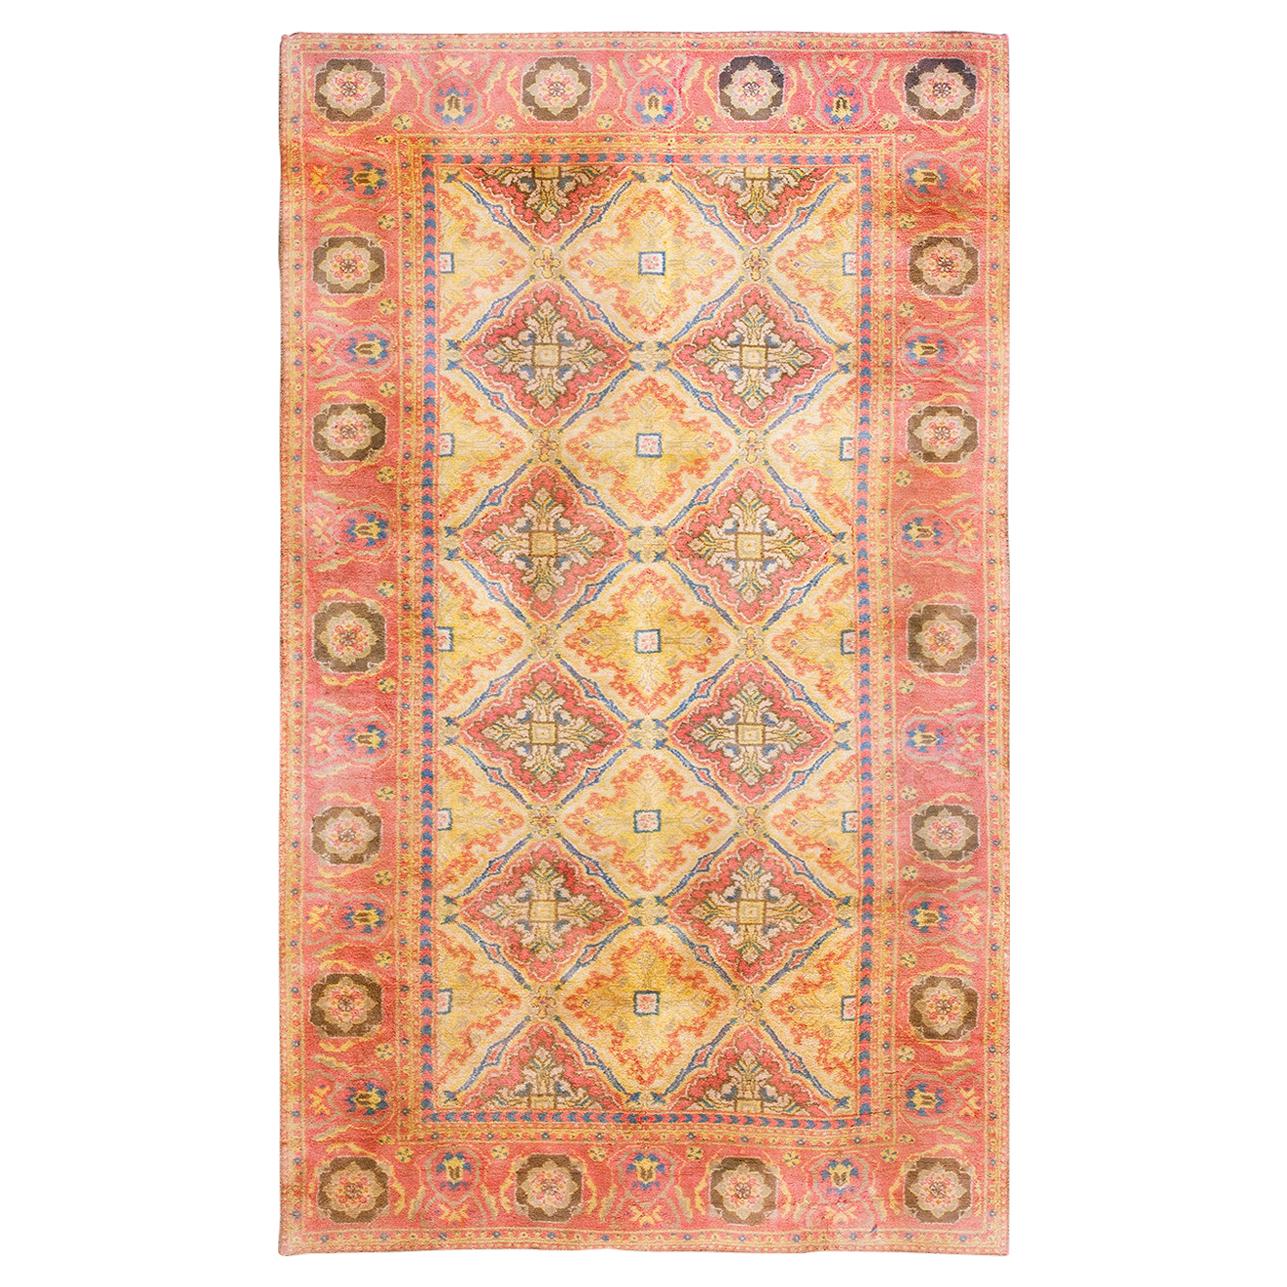 Early 20th Century Cotton Agra Carpet ( 4' x 7' - 122 x 215 cm )